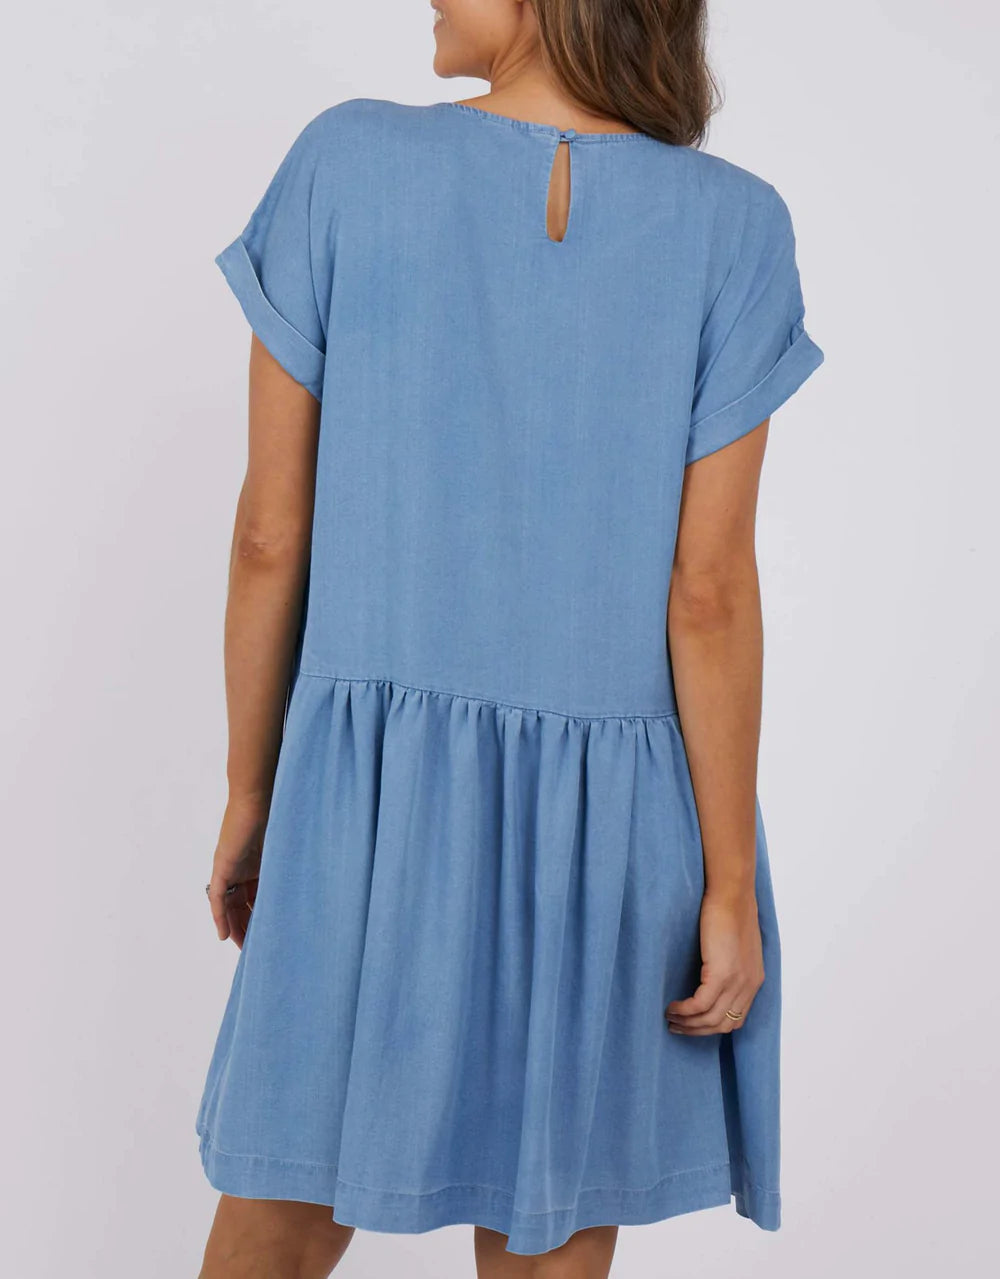 Harlow Chambray Dress - Blue